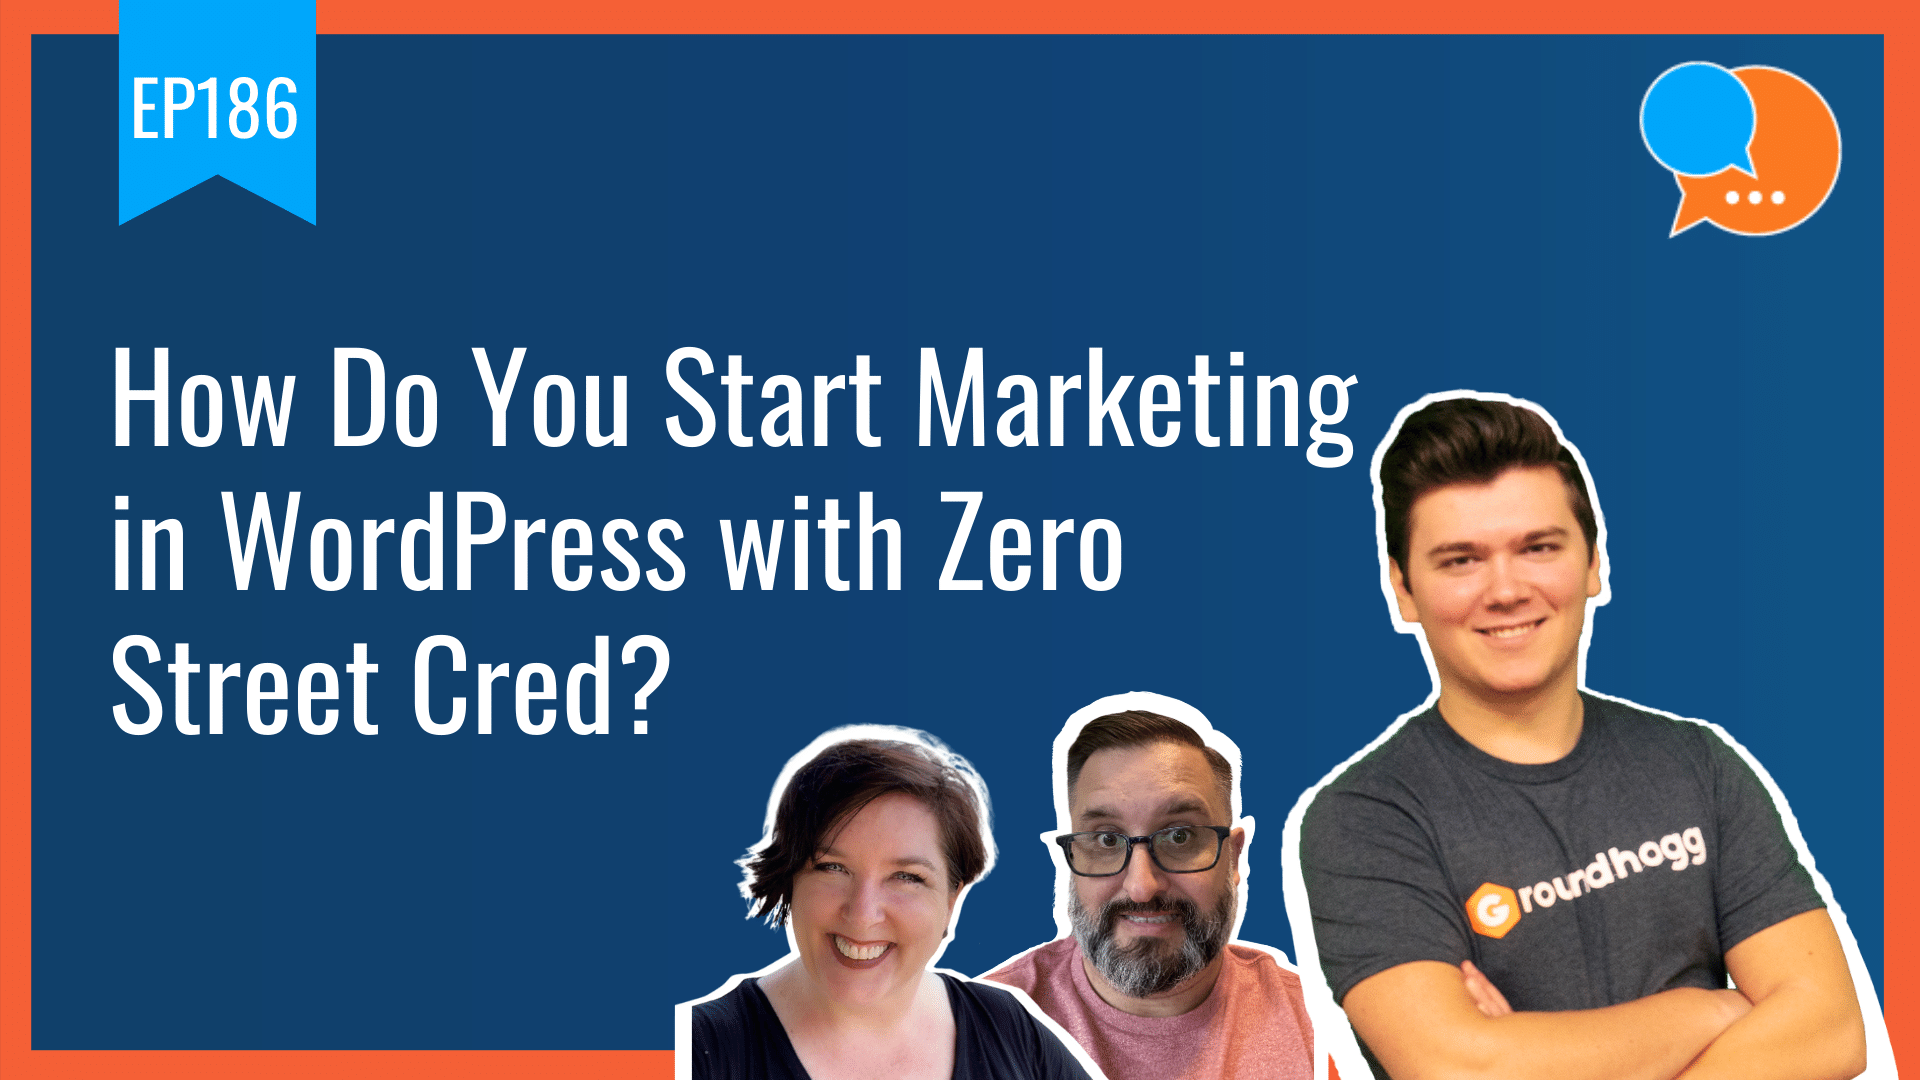 EP186 - How Do You Start Marketing in WordPress with Zero Street Cred?